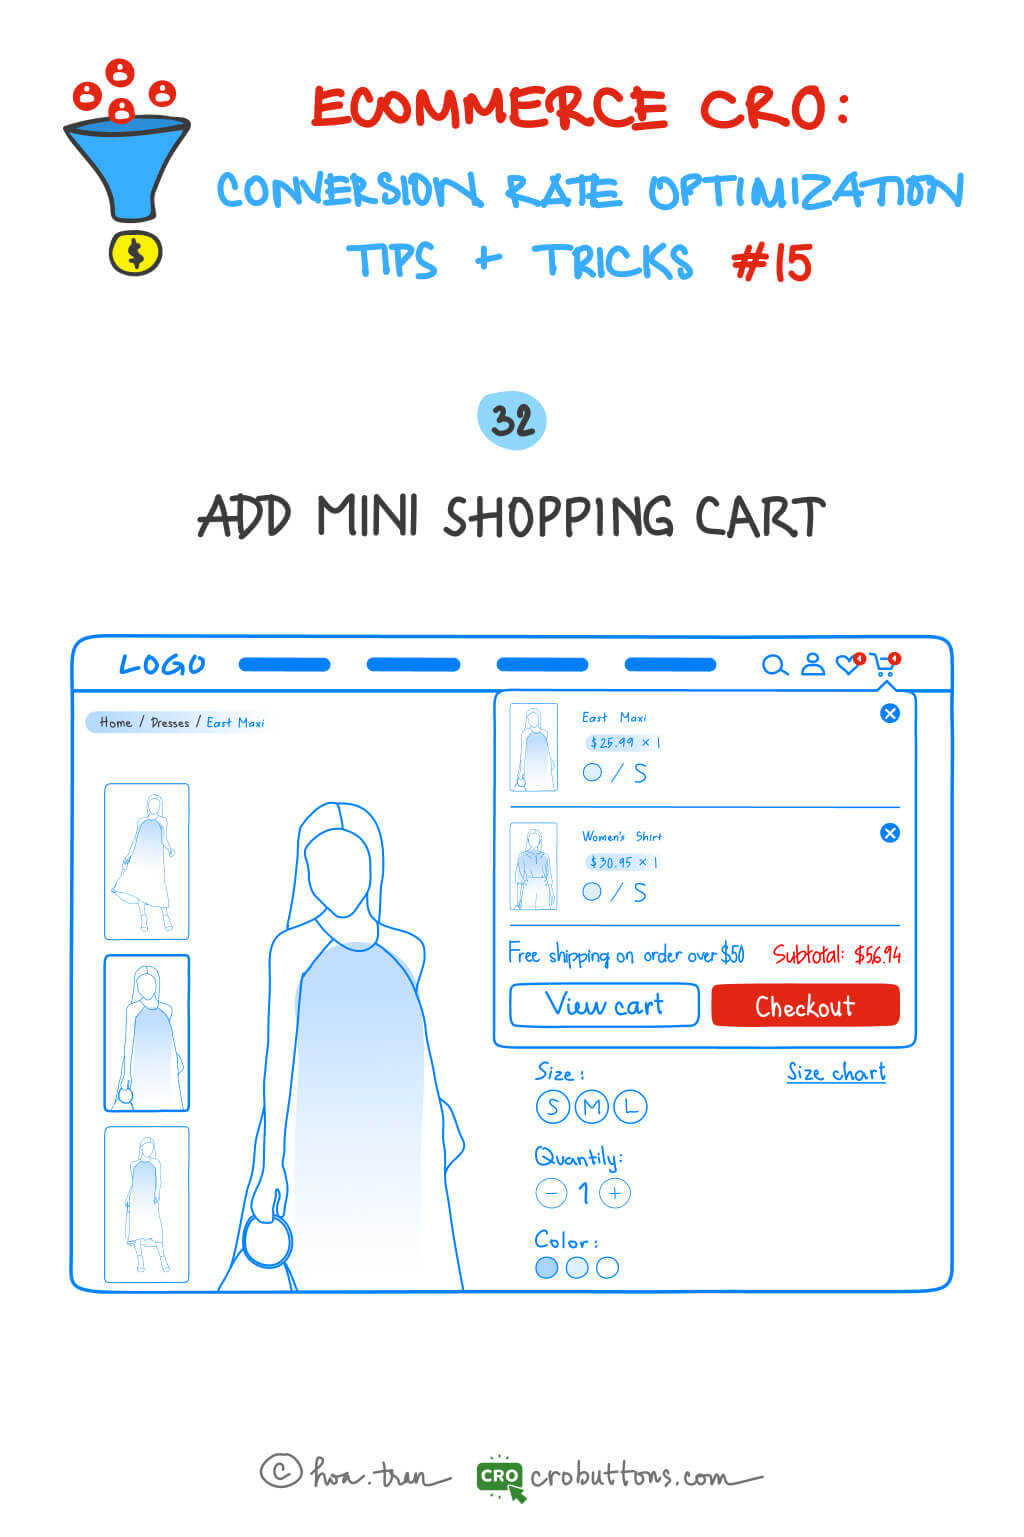 Add mini shopping cart – eCommerce CRO Tips & Tricks #15